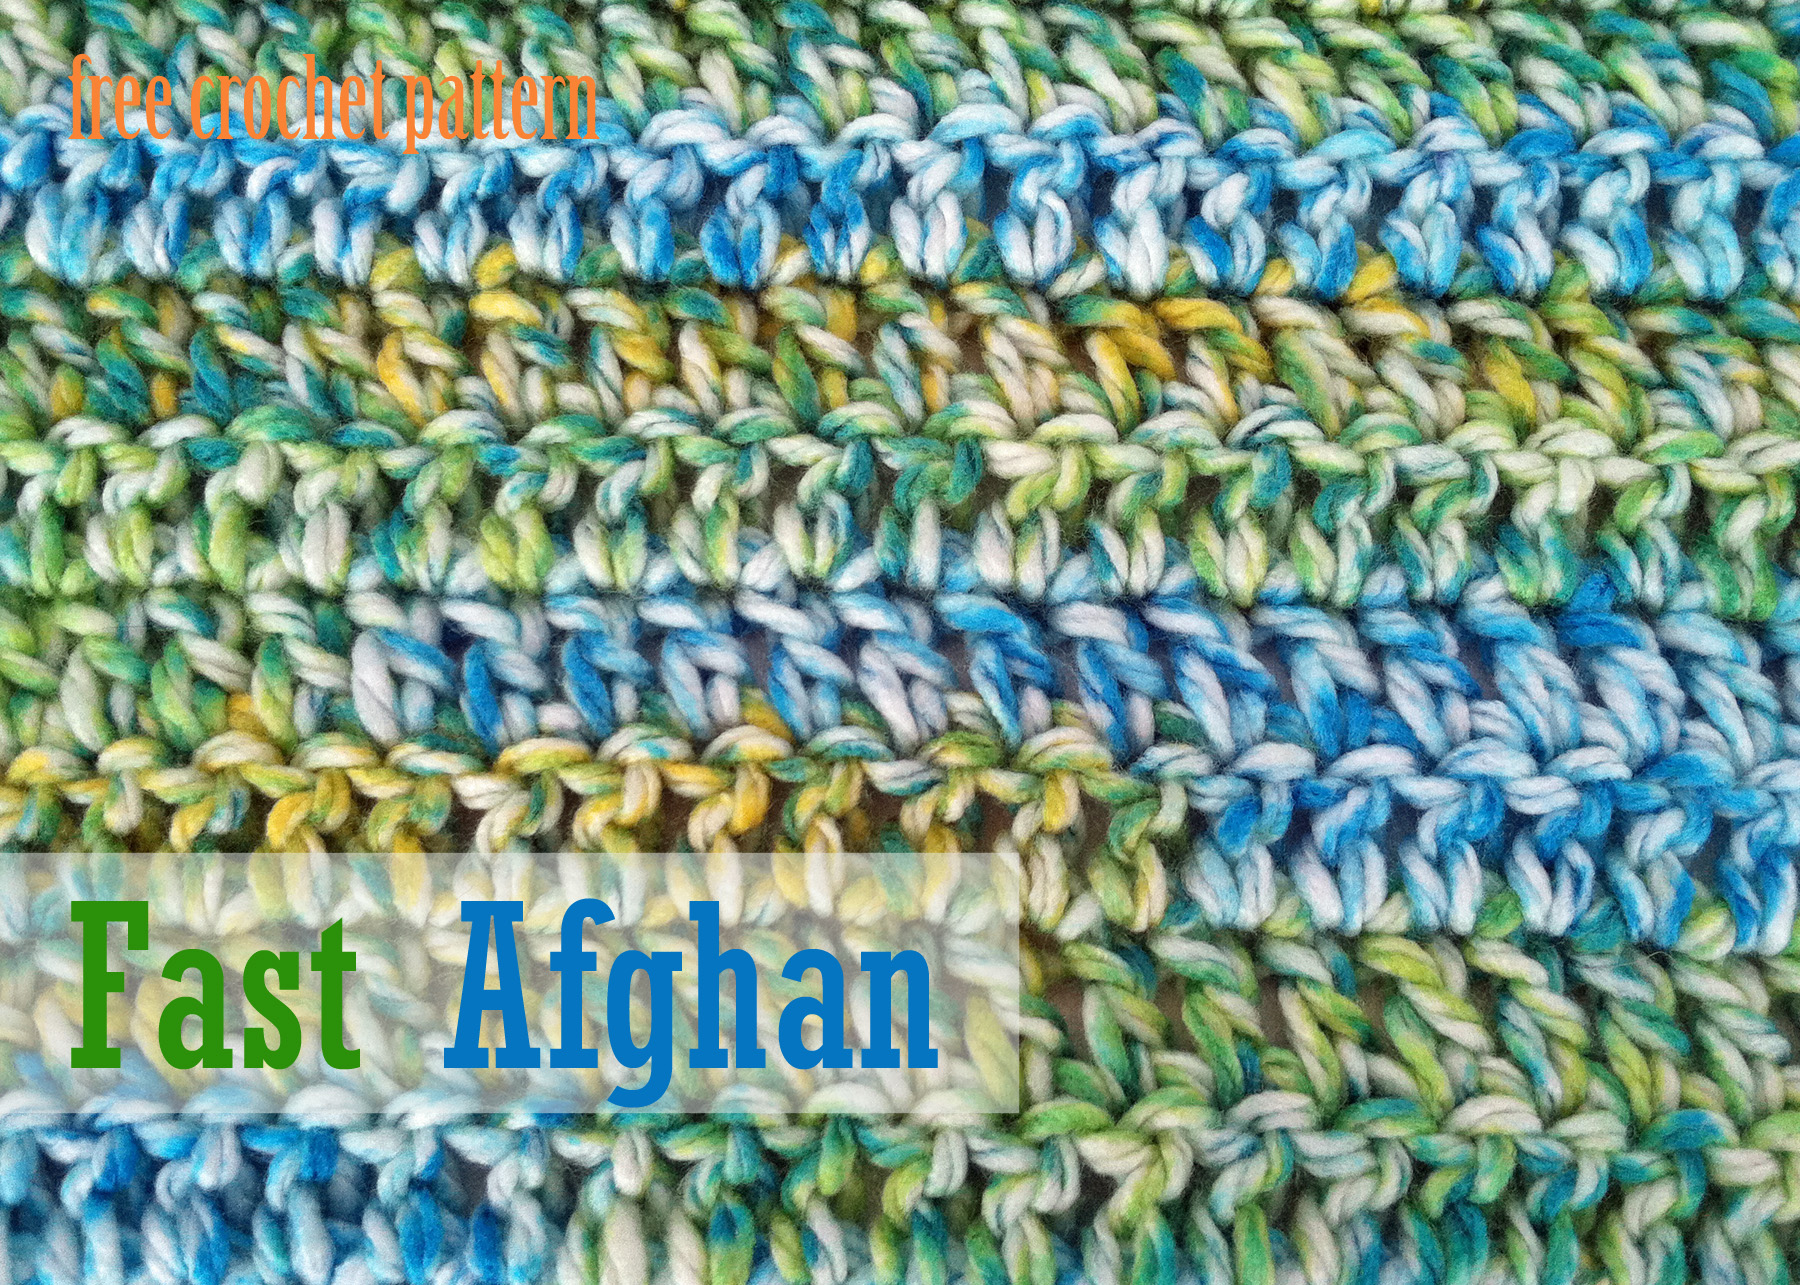 Easy Afghan Crochet Pattern Free Crochet Pattern Fast Afghan